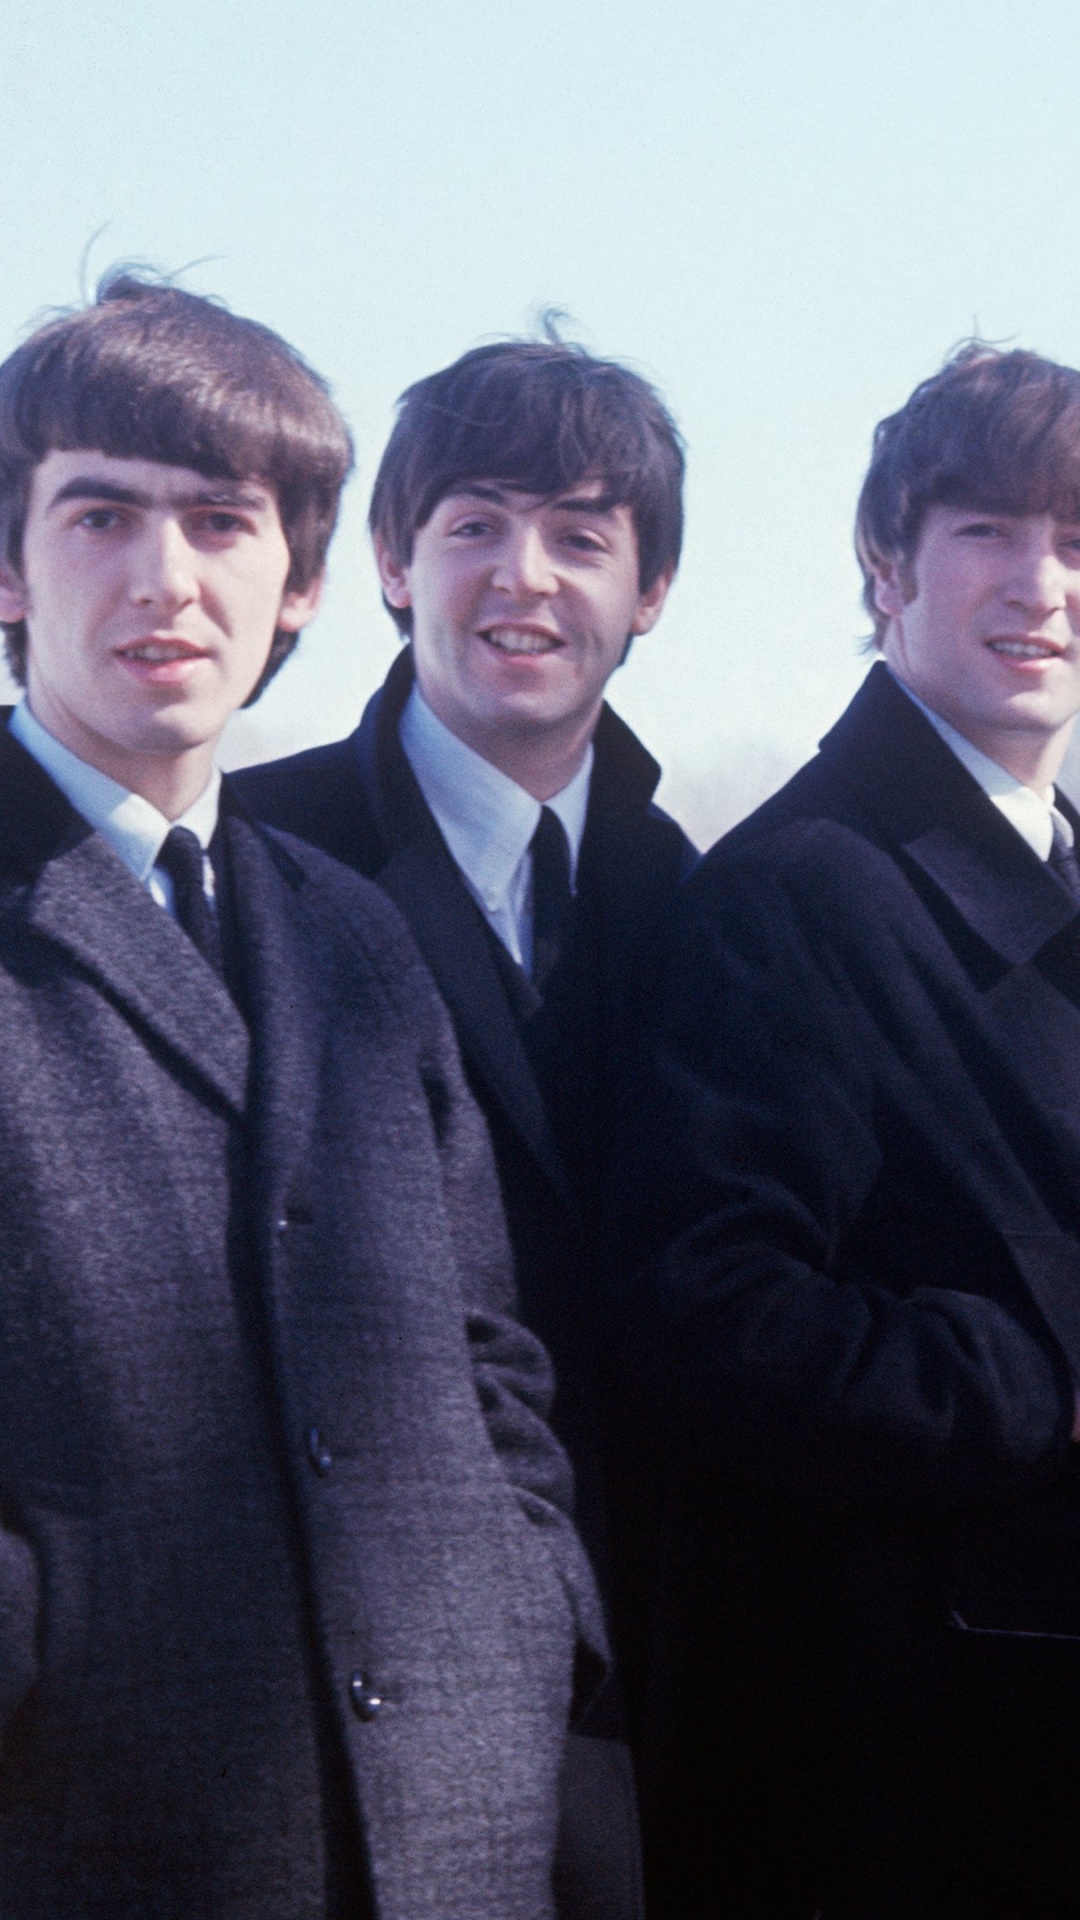 Paul McCartney, Ringo Starr, The Beatles, Social Group, Suit. Wallpaper in 1080x1920 Resolution